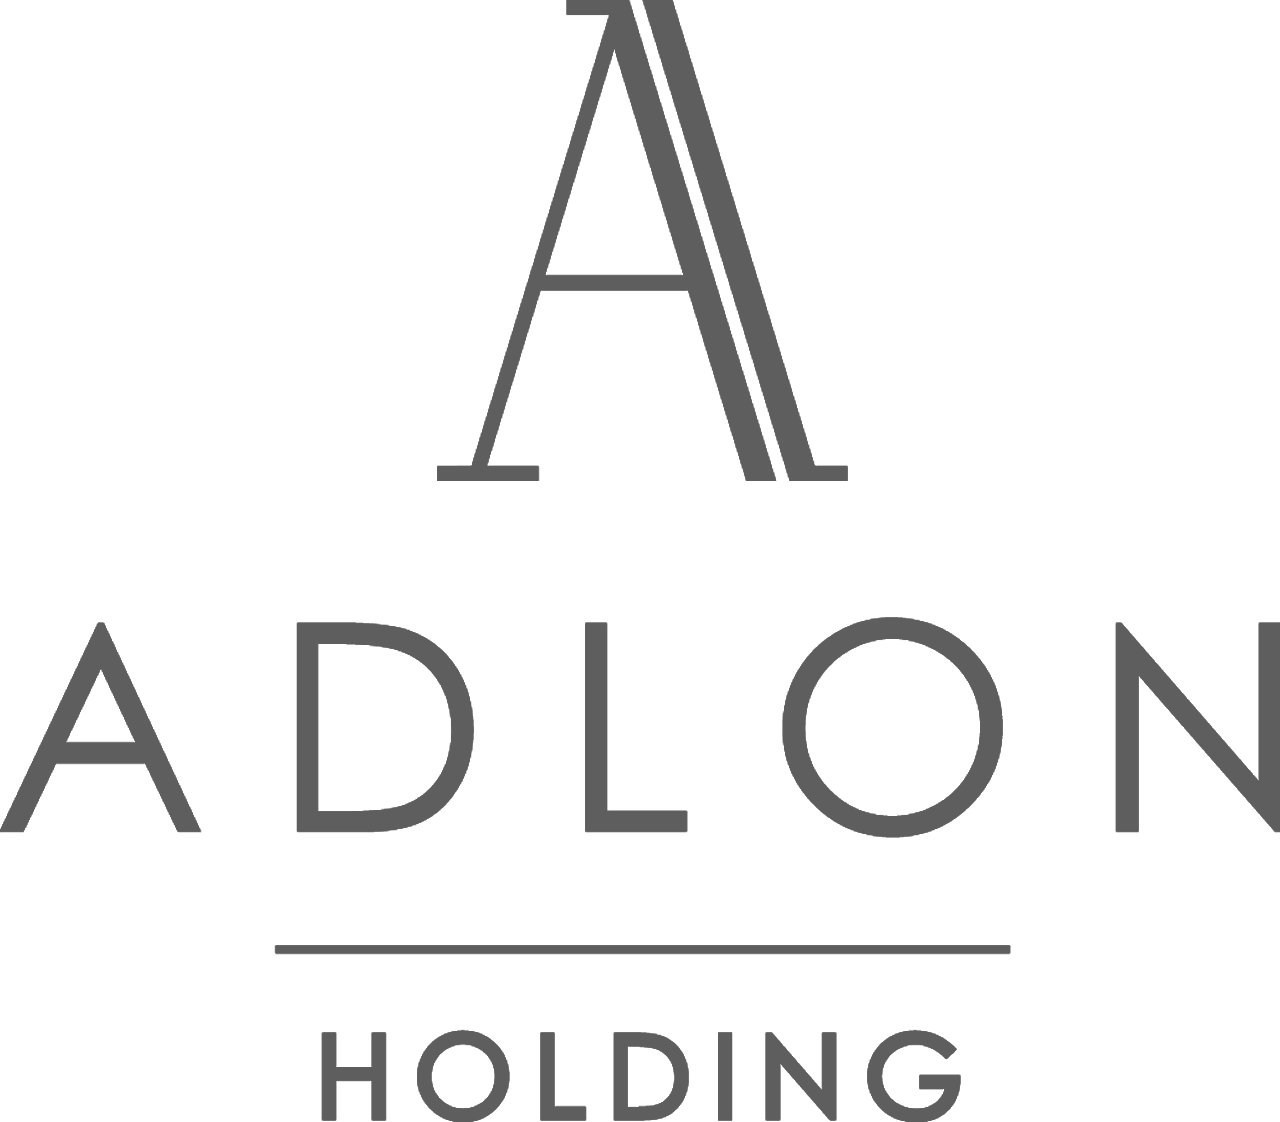 Adlon holding